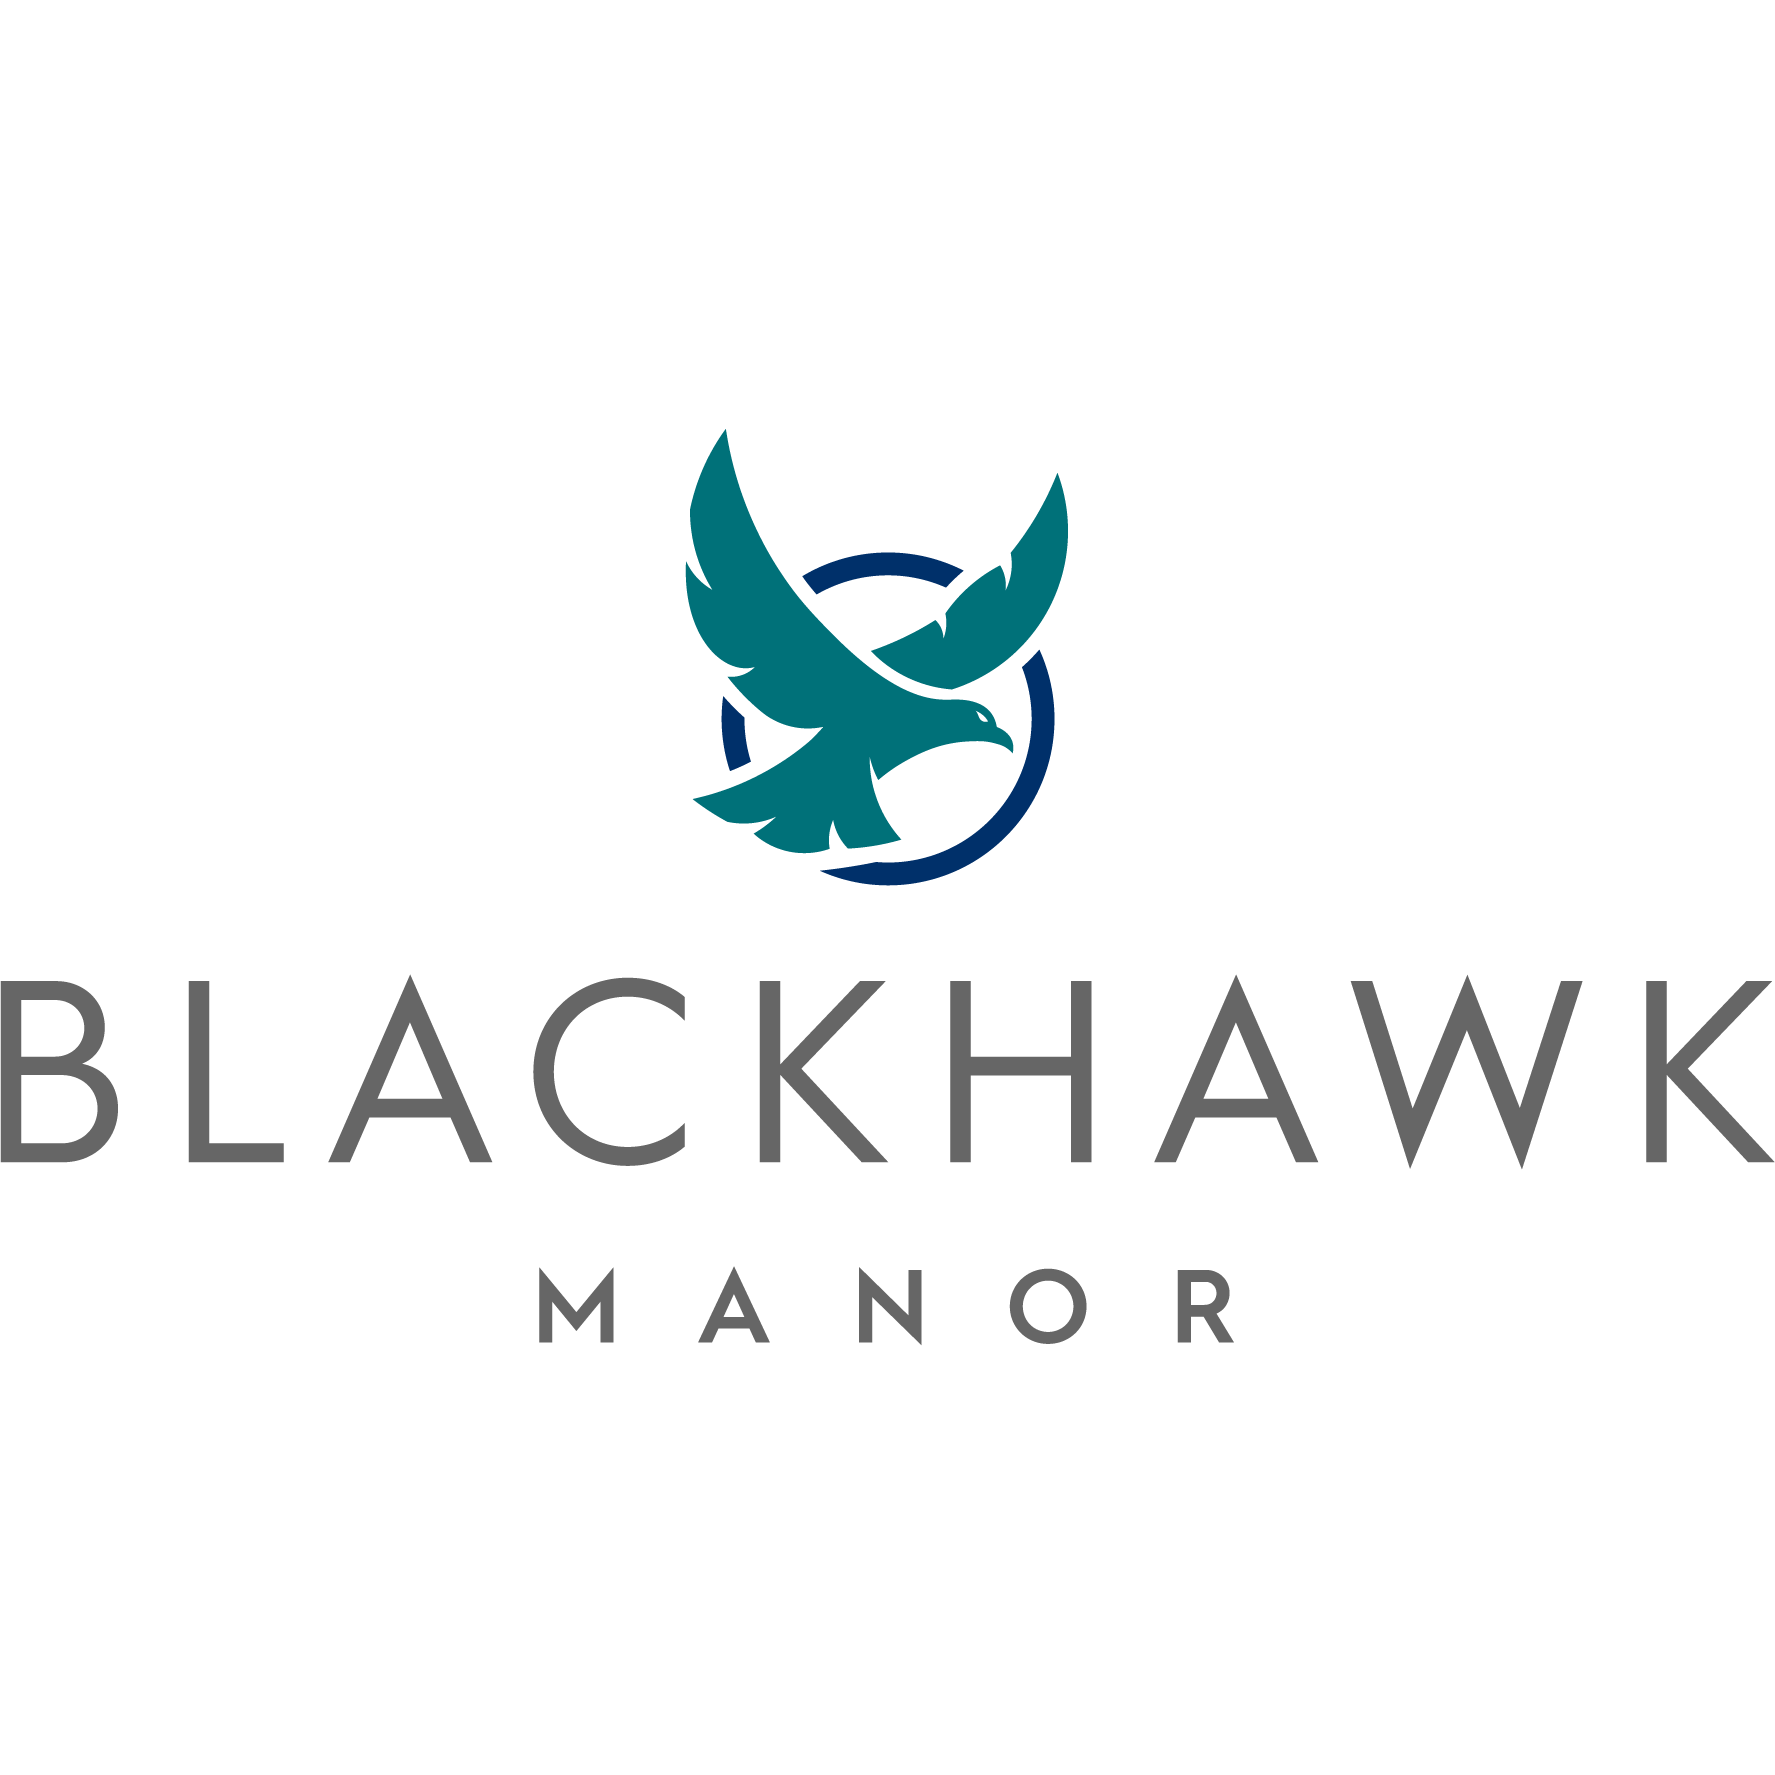 Blackhawk Manor